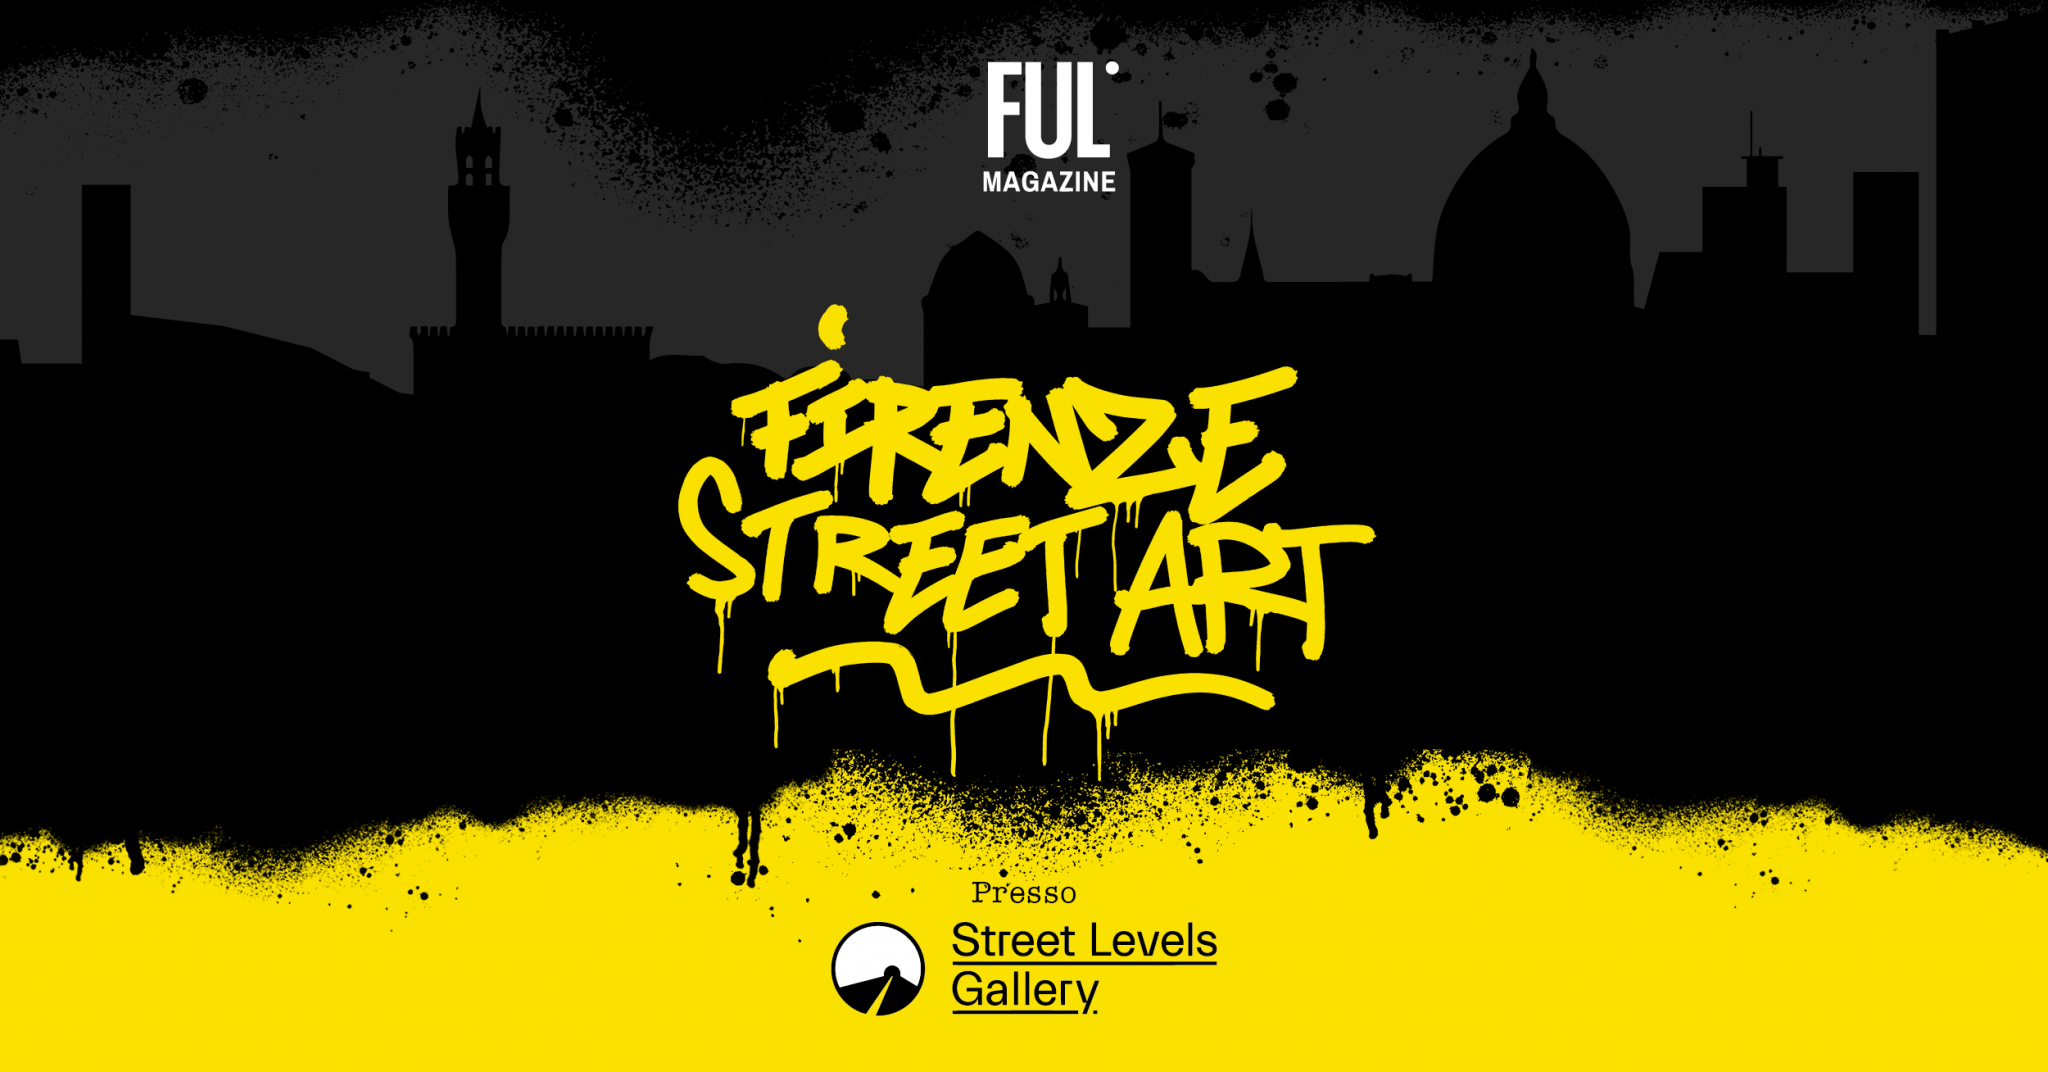 Firenze street art street levels gallery